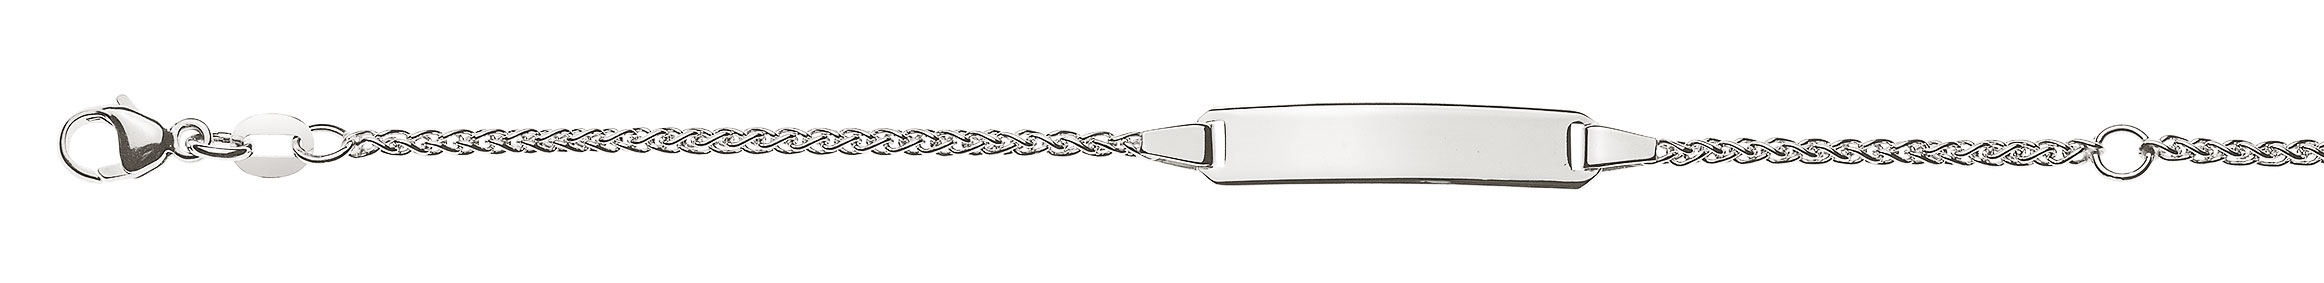 AURONOS Prestige ID-Bracelet en or blanc 18k Chaîne de tresses 16cm